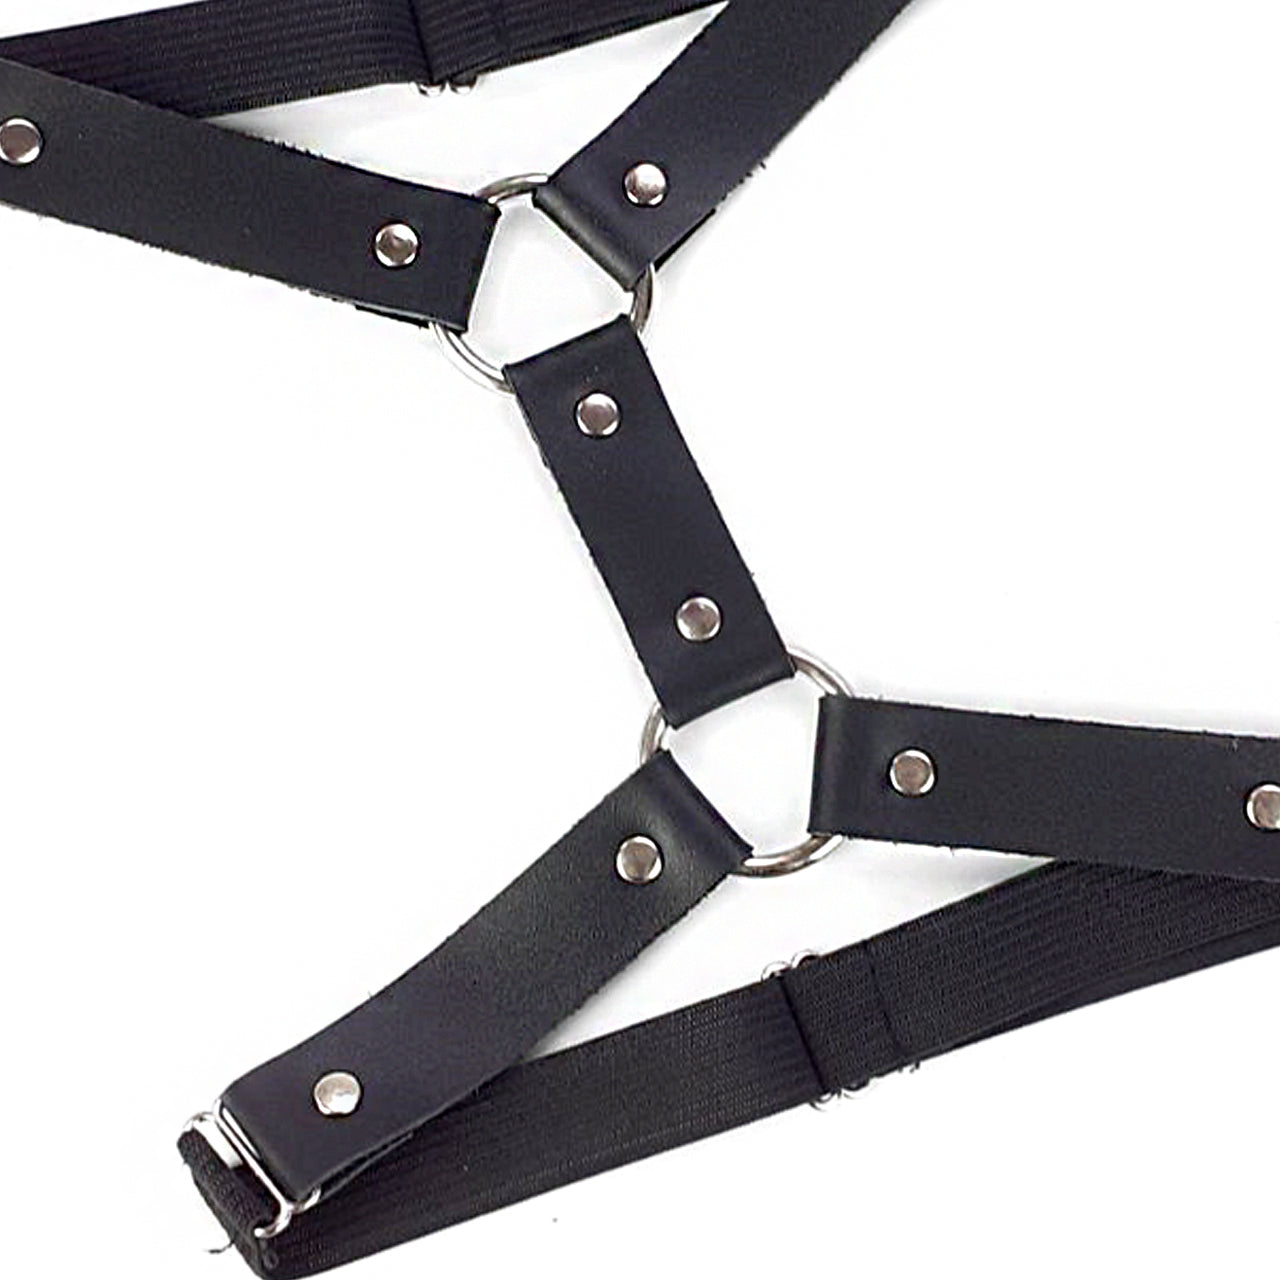 Leg BDSM leather harness 2pcs, Black